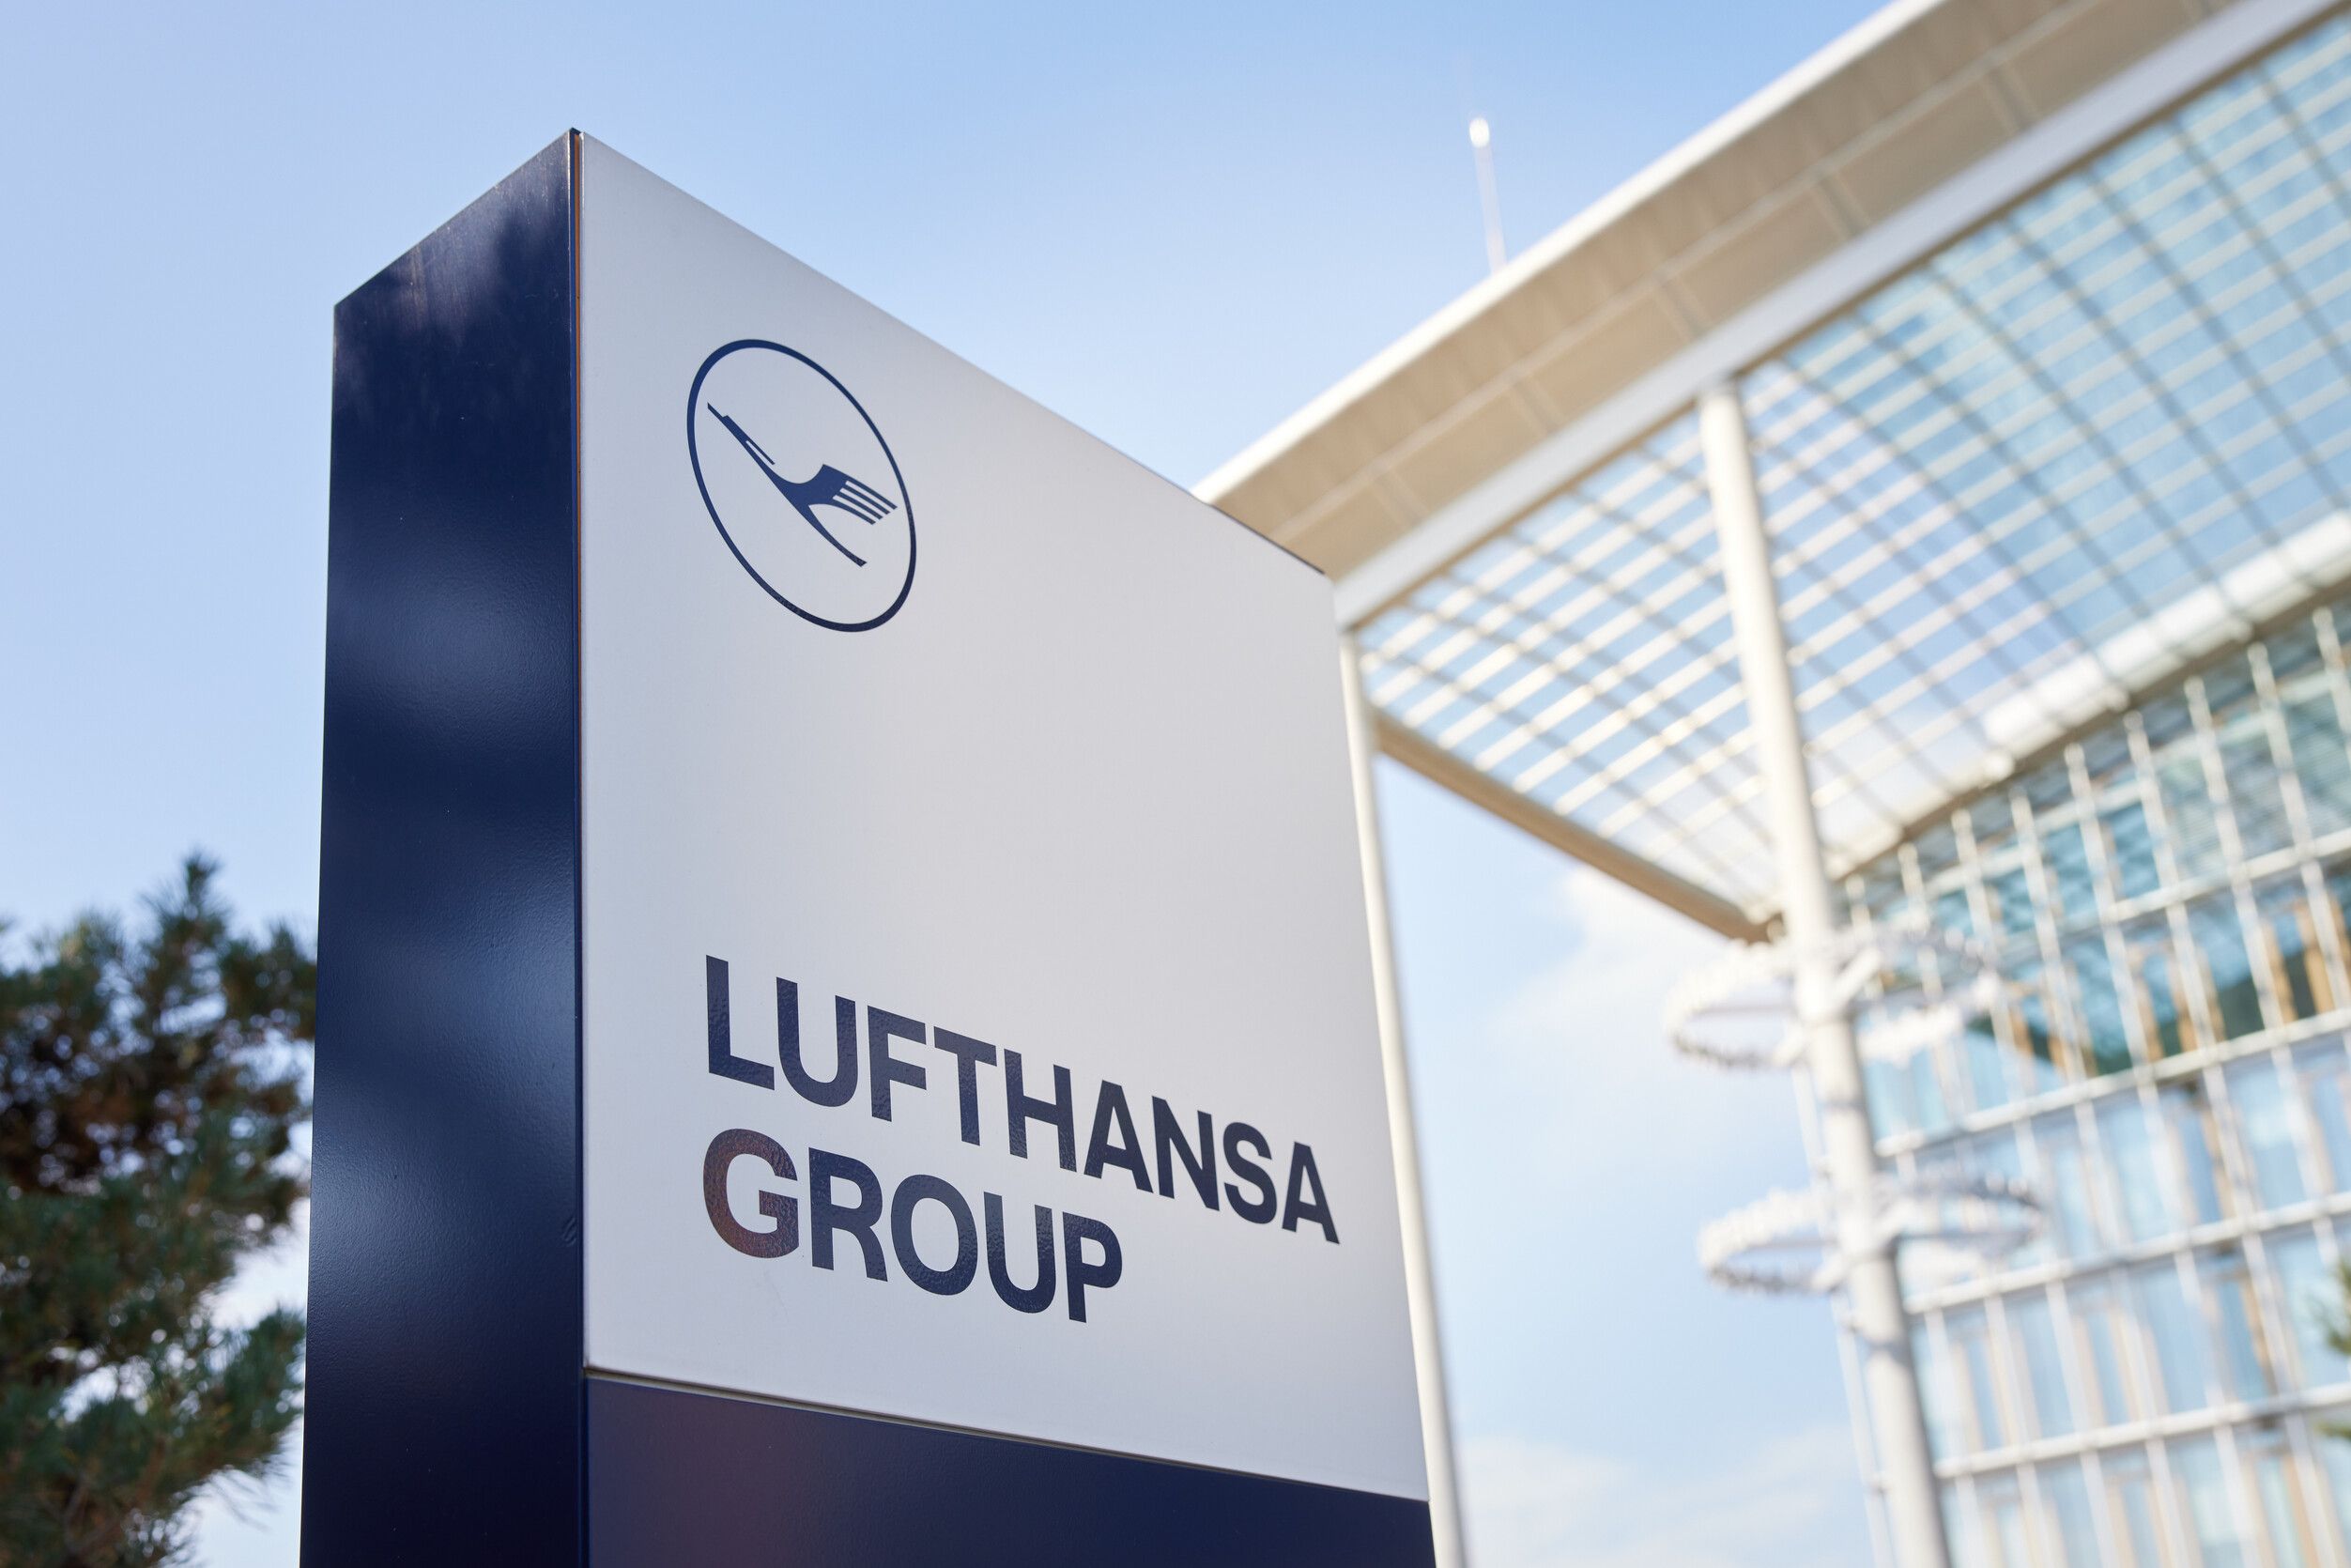 Lufthansa group signboard